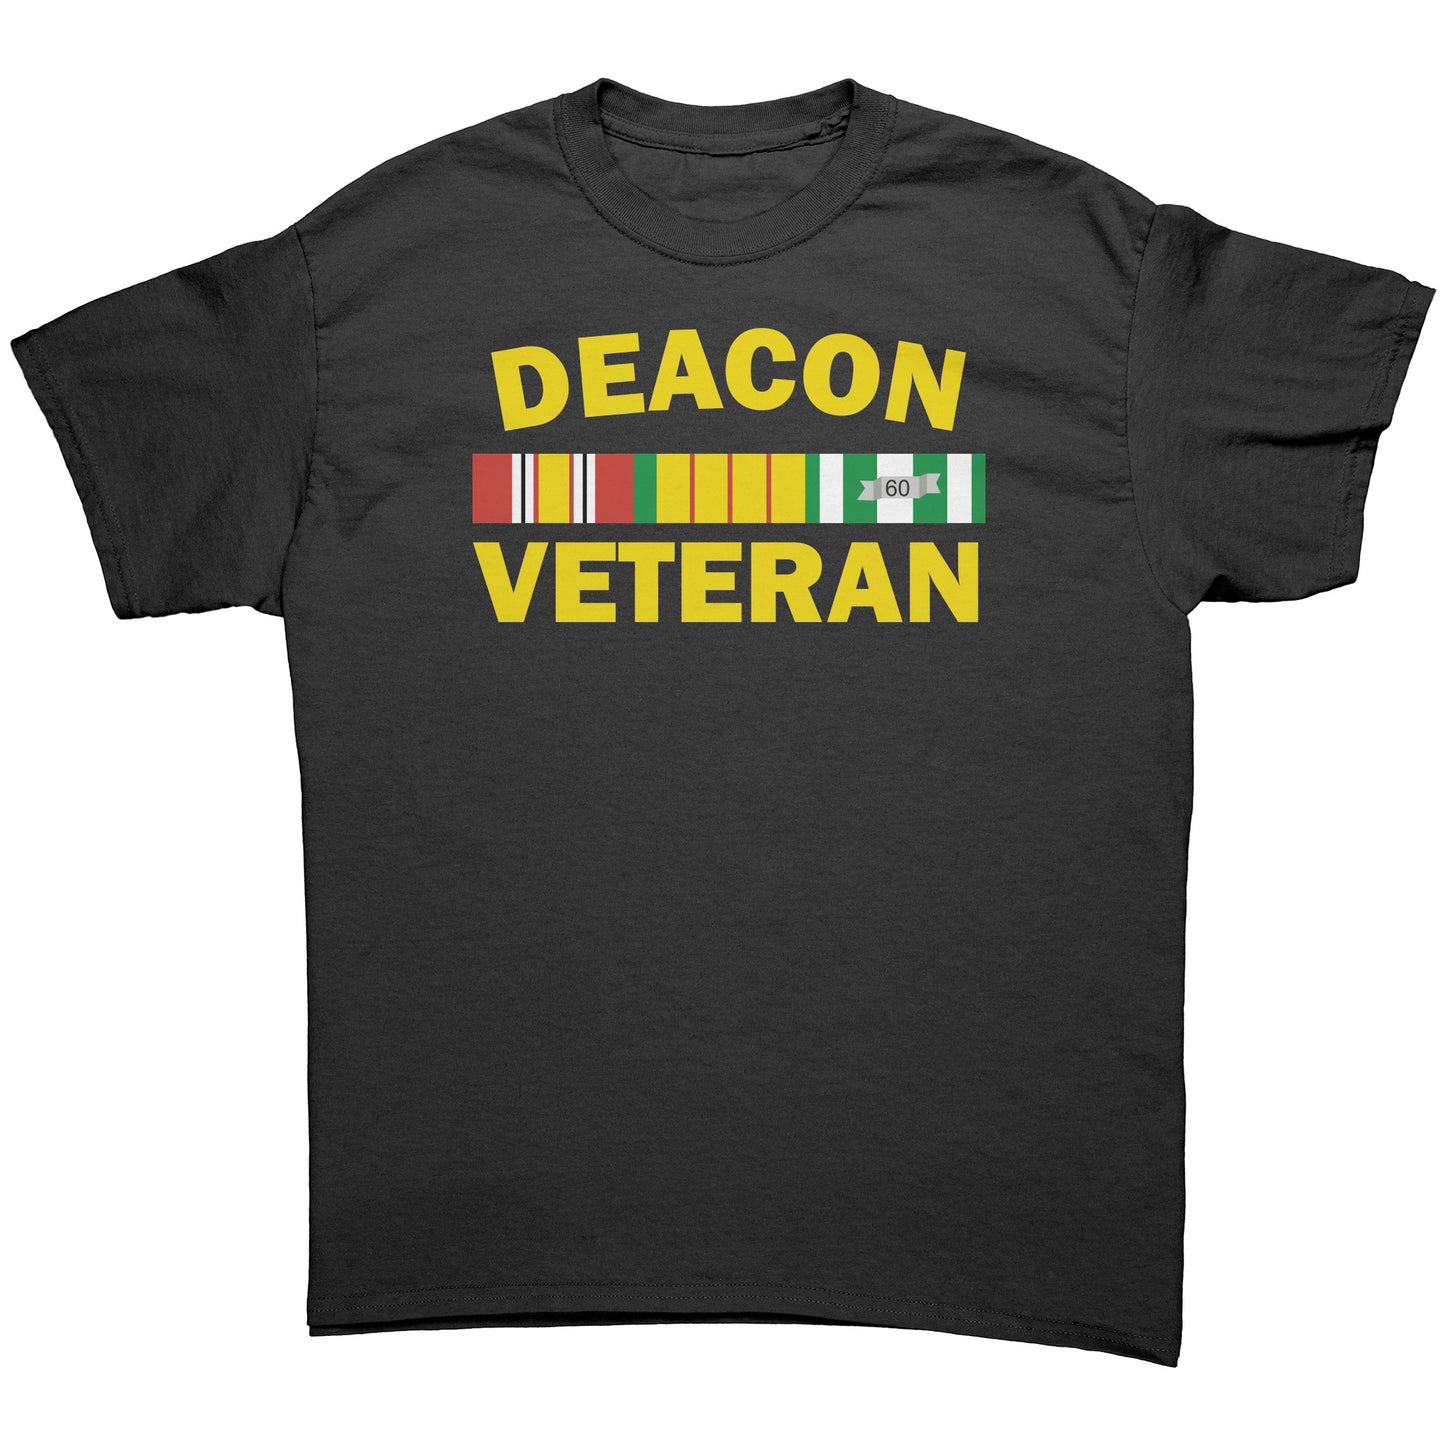 Deacon Veteran Men's T-Shirt